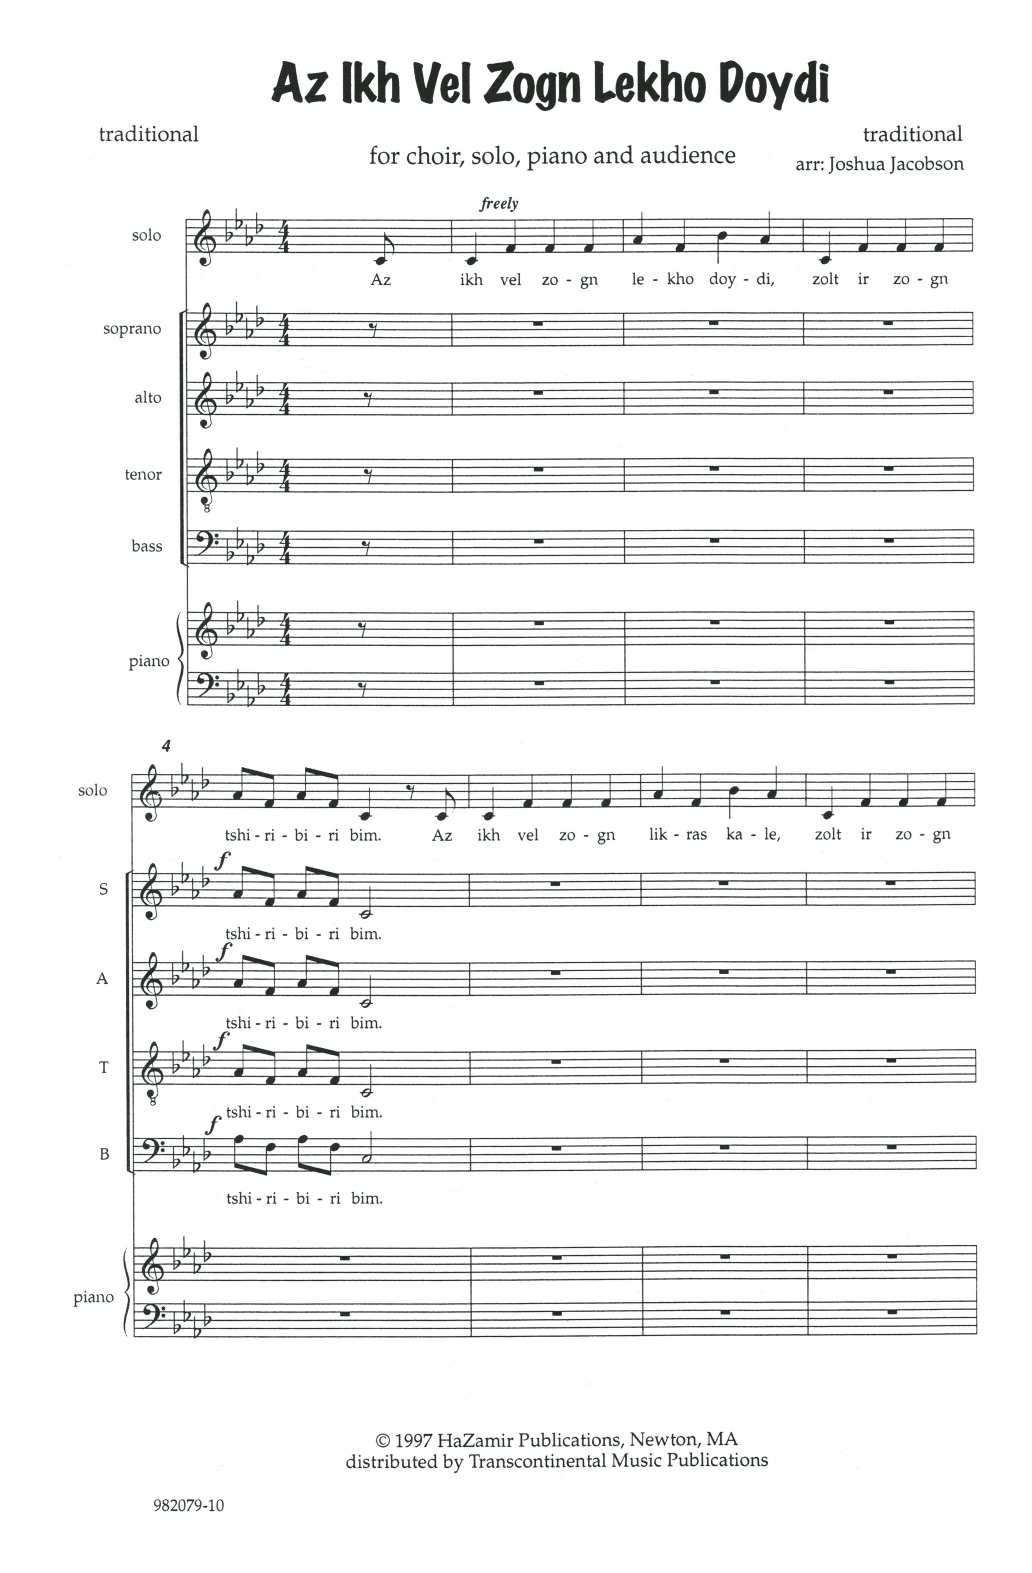 Joshua Jacobson Az Ikh Vel Zogn Lekho Doydi Sheet Music Notes & Chords for SATB Choir - Download or Print PDF